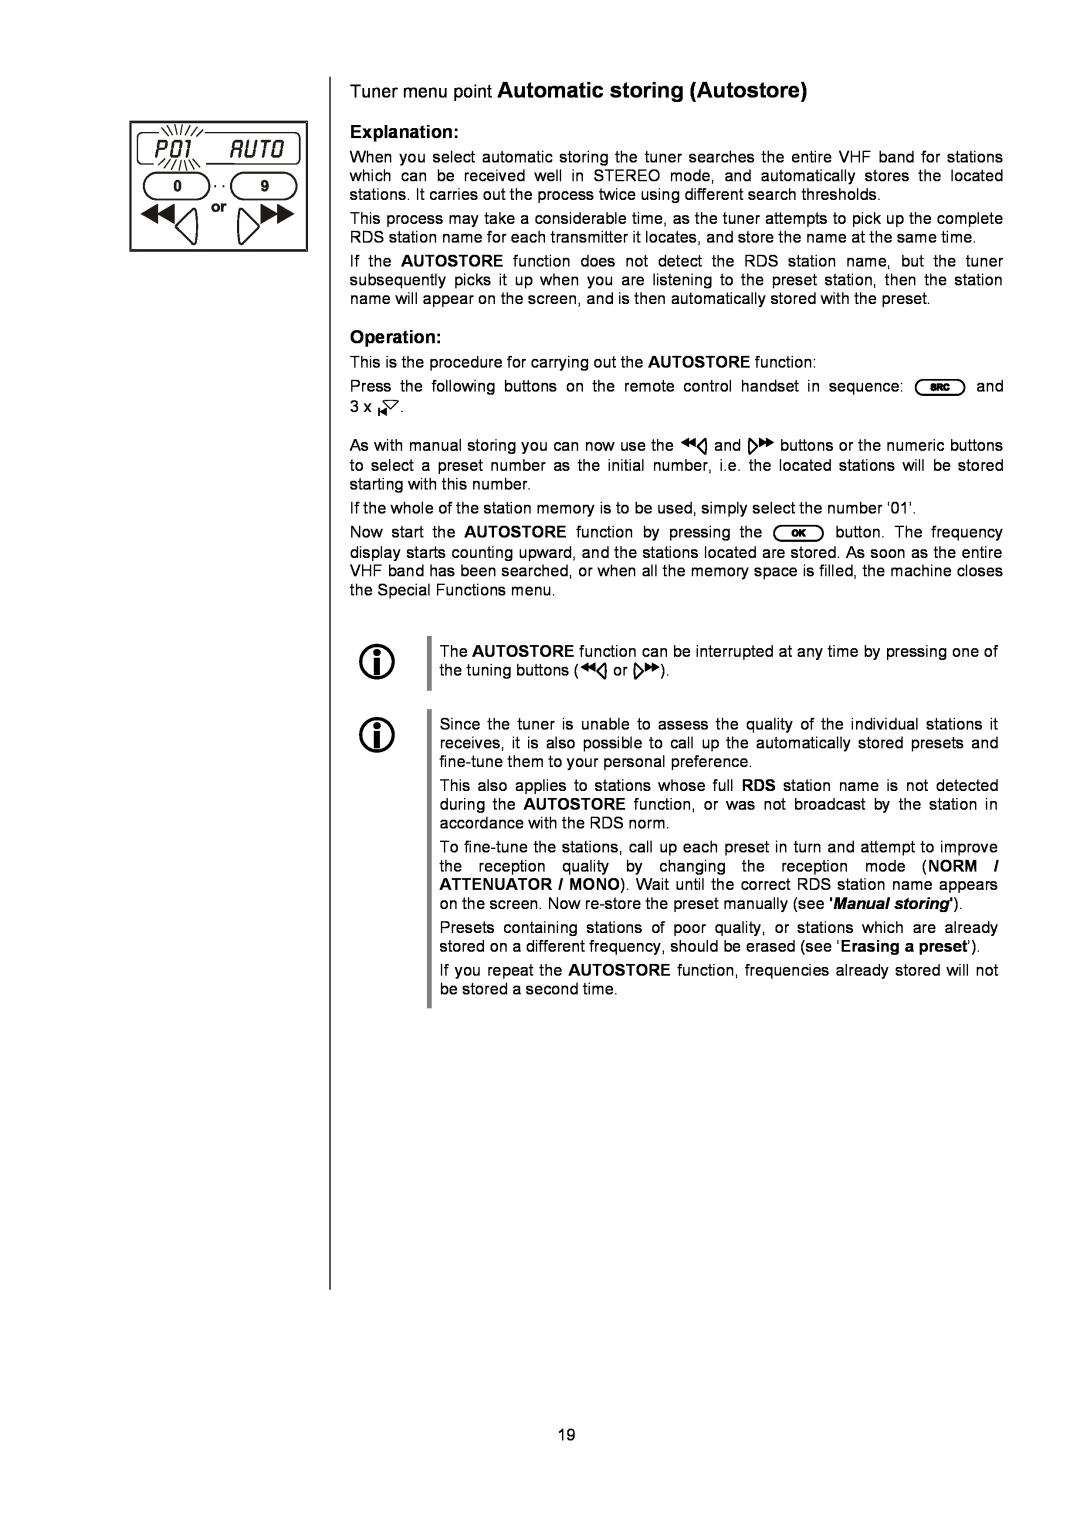 T+A Elektroakustik K1 AV user manual Tuner menu point Automatic storing Autostore, Explanation, Operation 